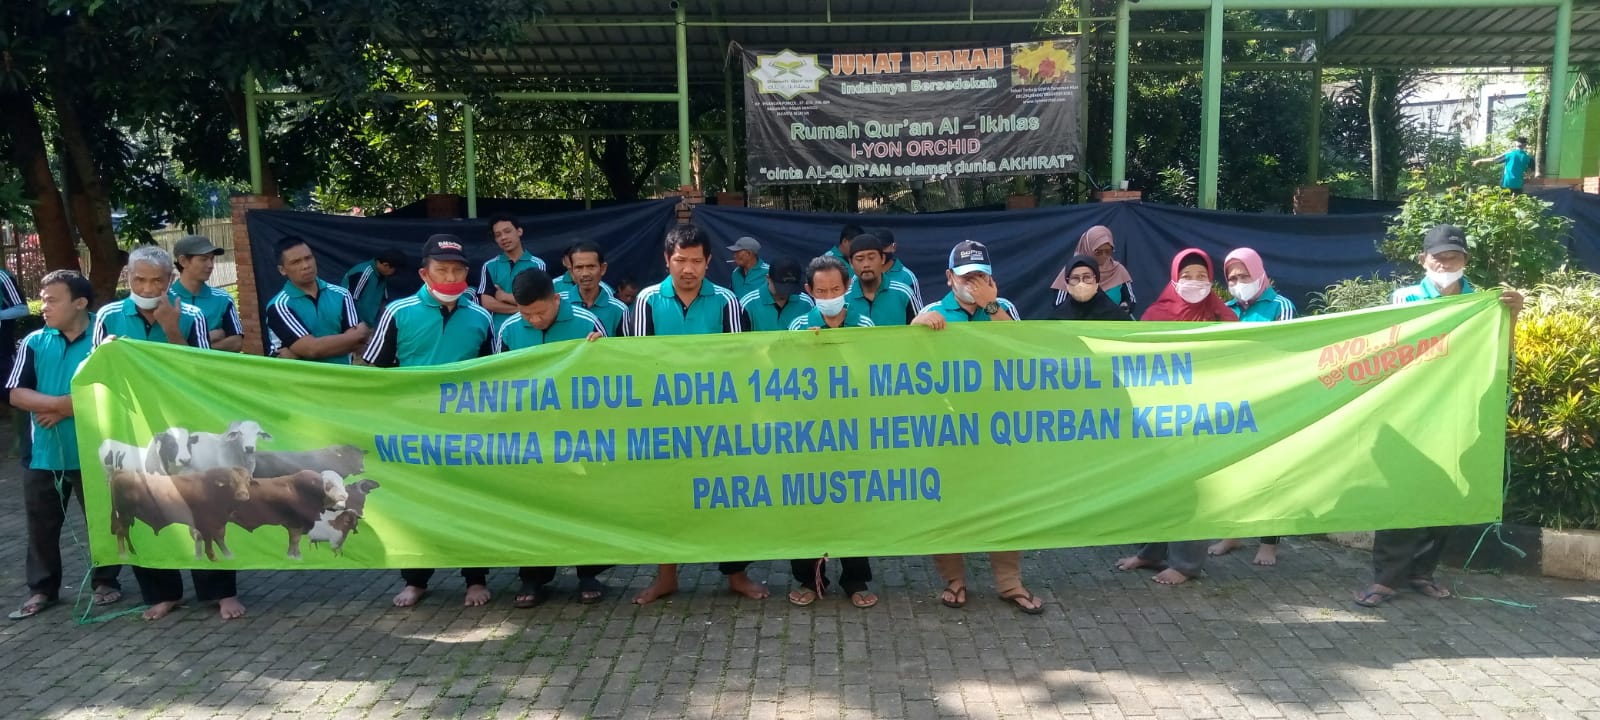 YMPP - Pelaksanaan Pemotongan Hewan Kurban di Masjid Nurul Iman 1443 H/2022 M